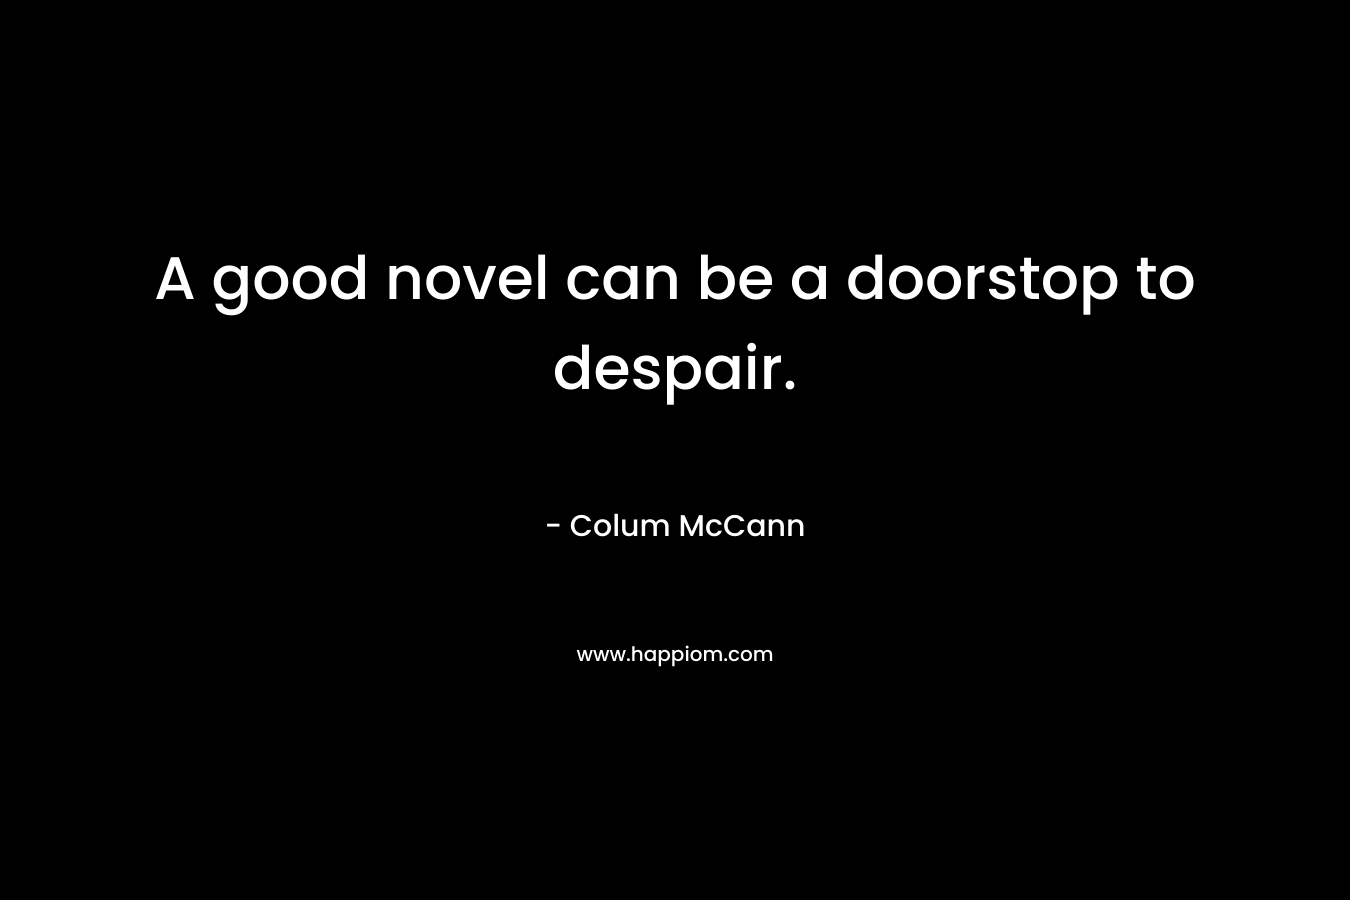 A good novel can be a doorstop to despair. – Colum McCann